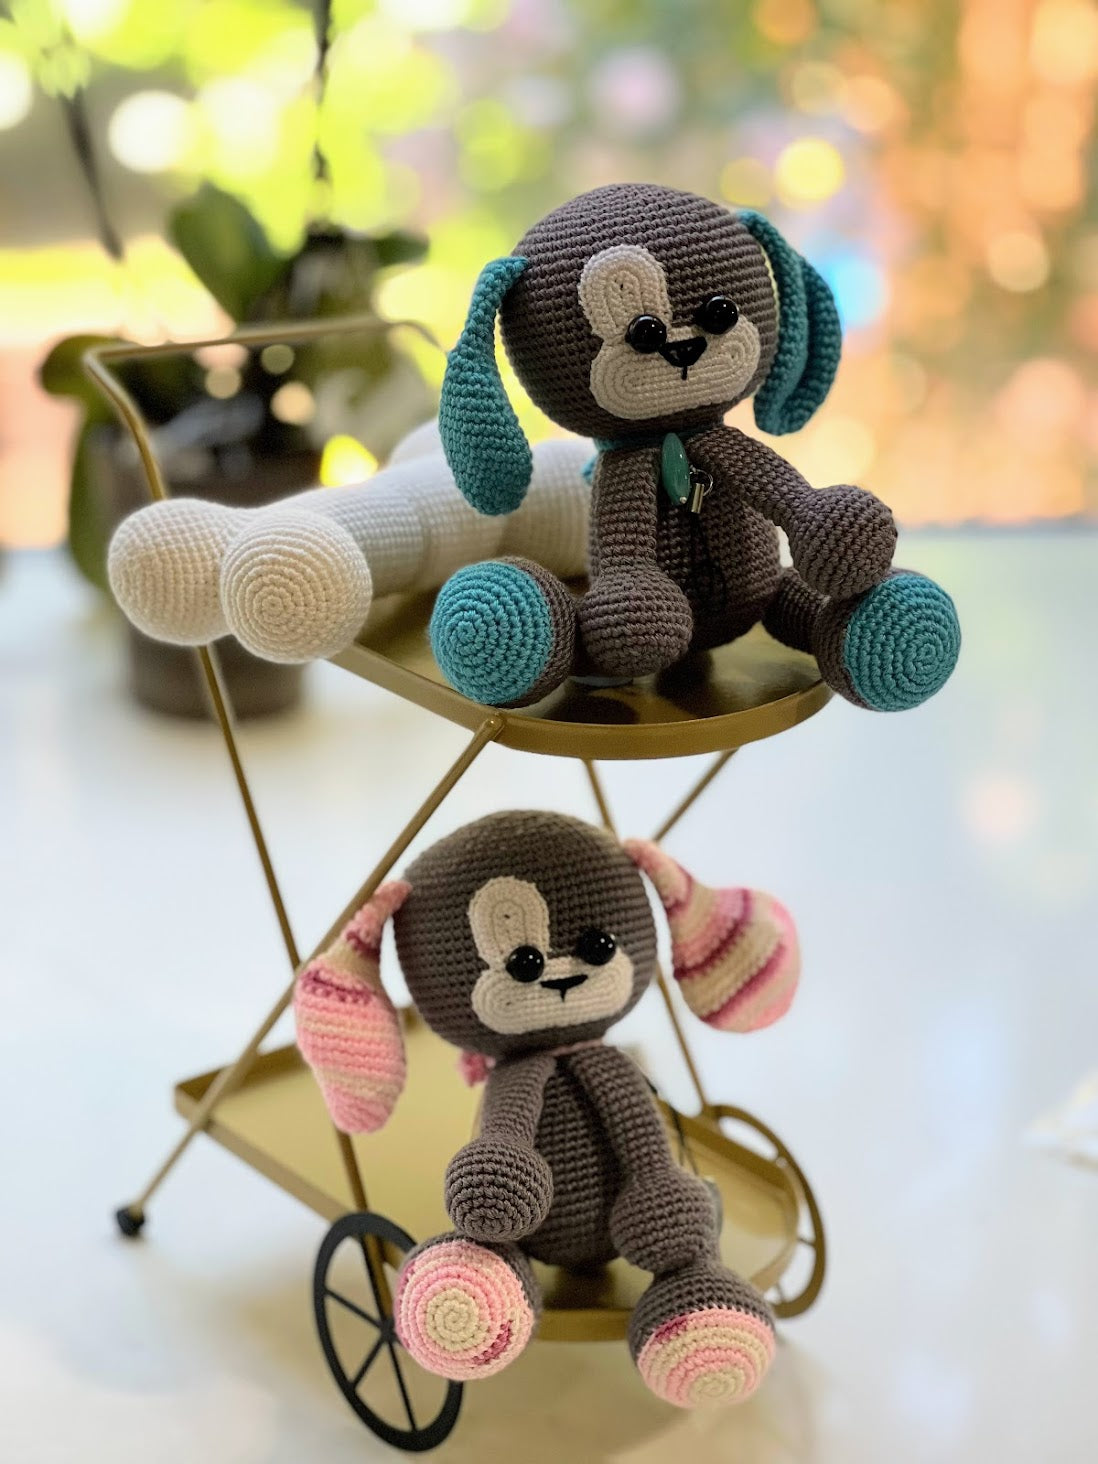 Stuffed Dog Toy - Crochet Knitted Amigurumi Toy